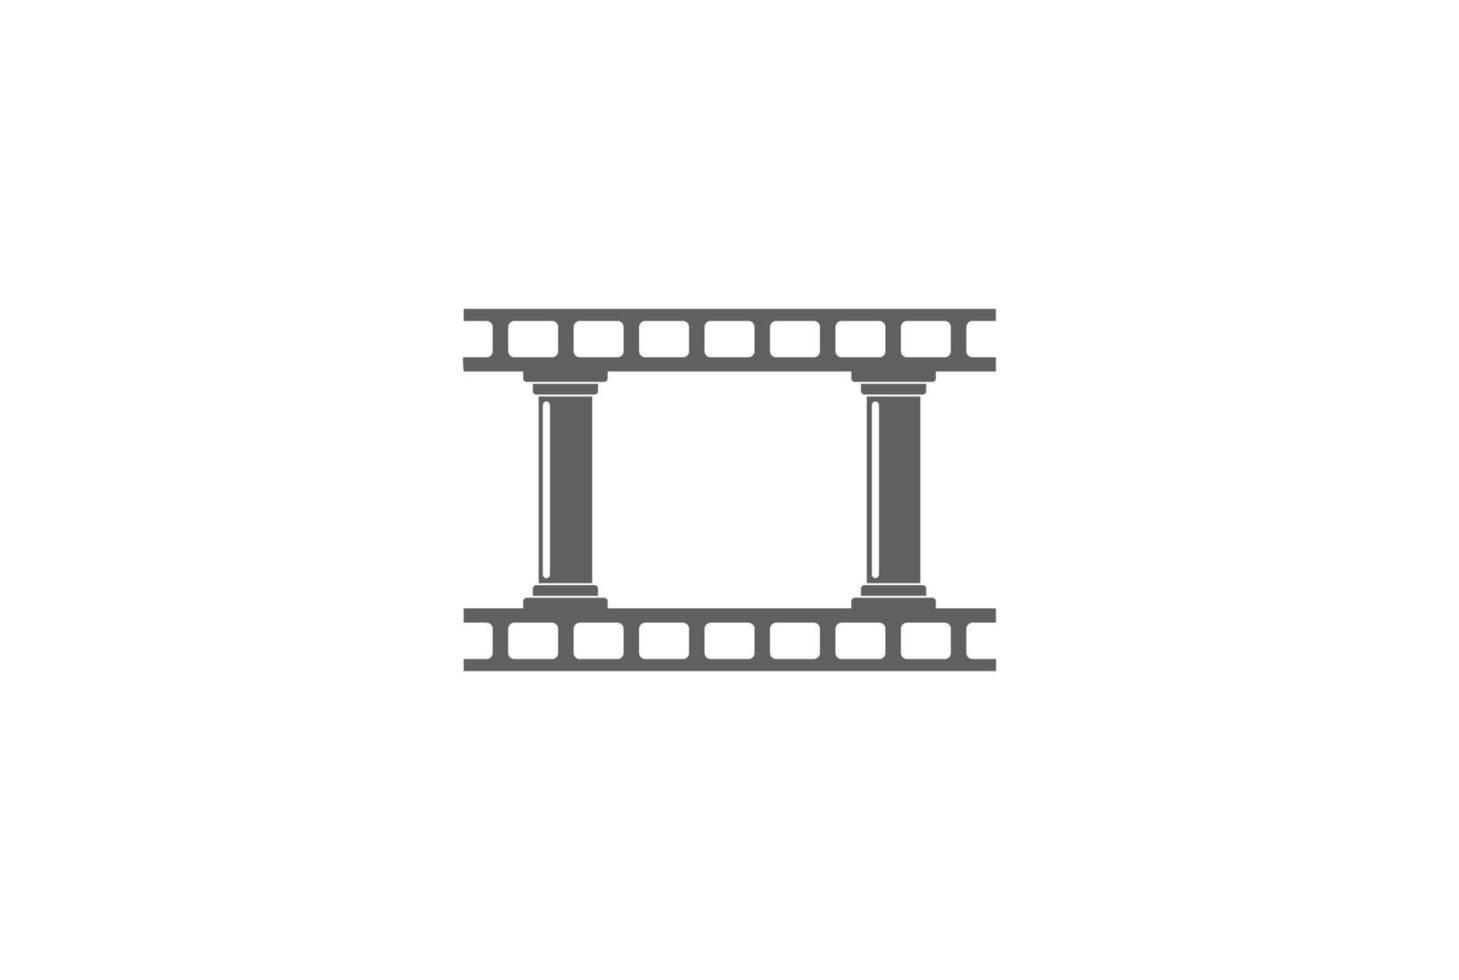 pelare filmremsa film bio produktion logotyp design vektor